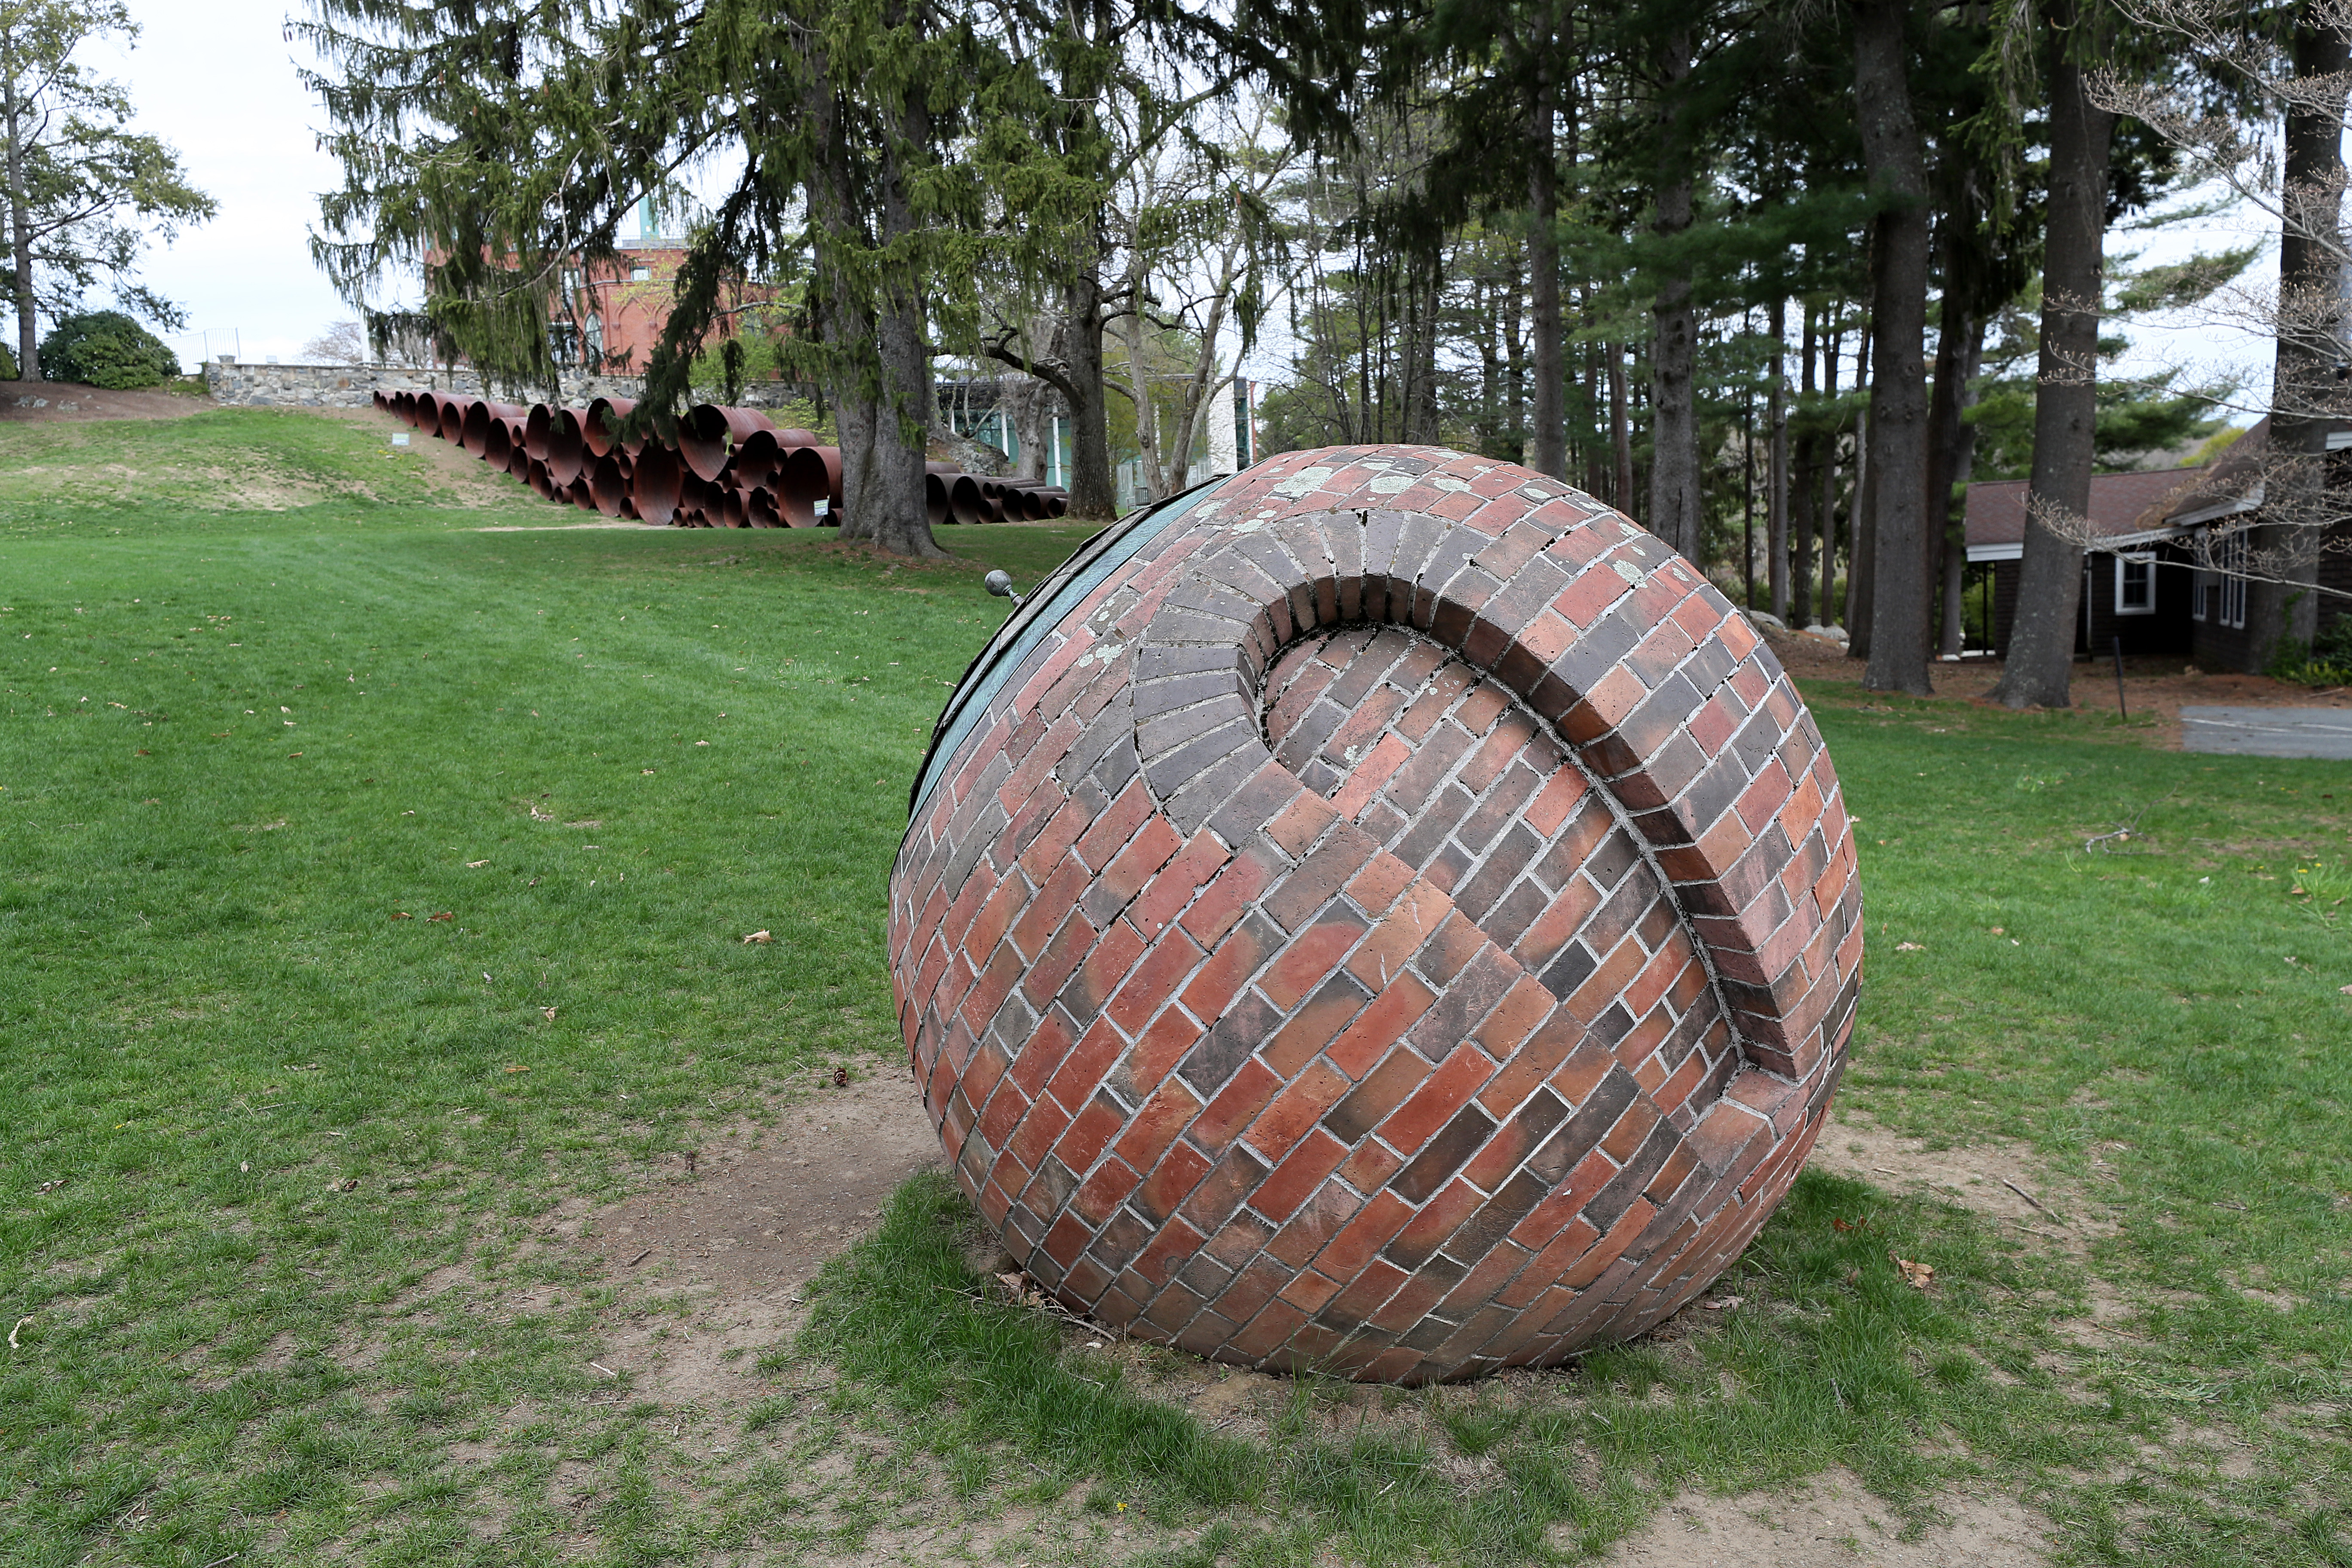 Lars Fisk's Cordova Ball at the Cordova Sculpture Park and Museum.